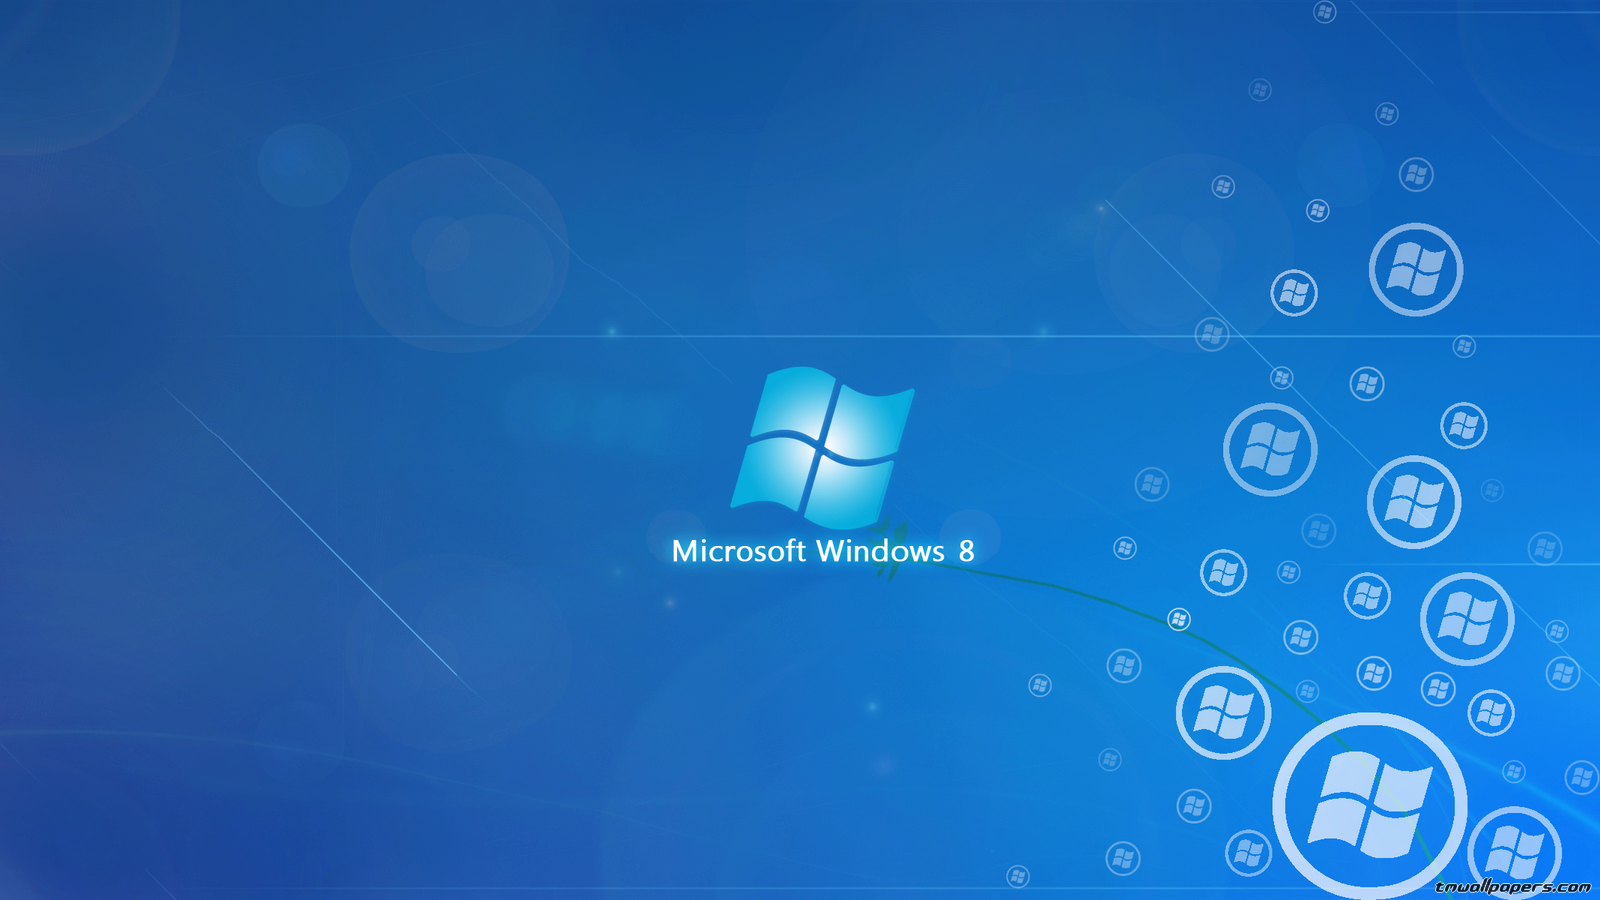 38+] Windows 8 HD Wallpaper 1600x900 - WallpaperSafari